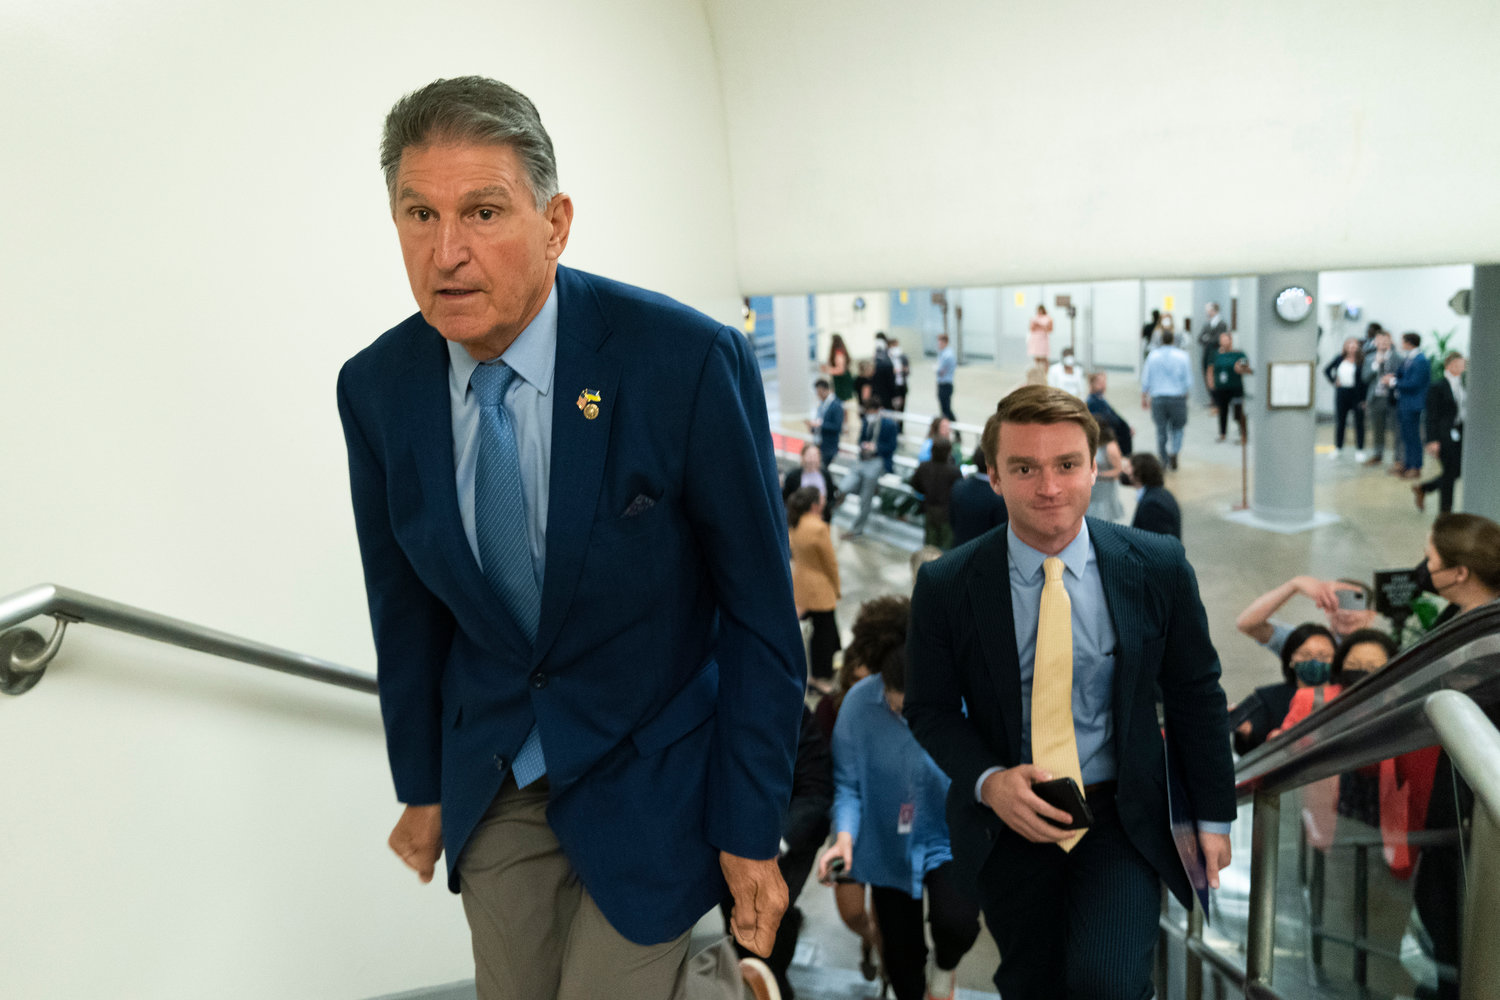 Journalists and staff follow Sen. Joe Manchin, D-W.Va., on Capitol Hill in Washington, Thursday, Aug. 4, 2022. (AP Photo/Manuel Balce Ceneta)